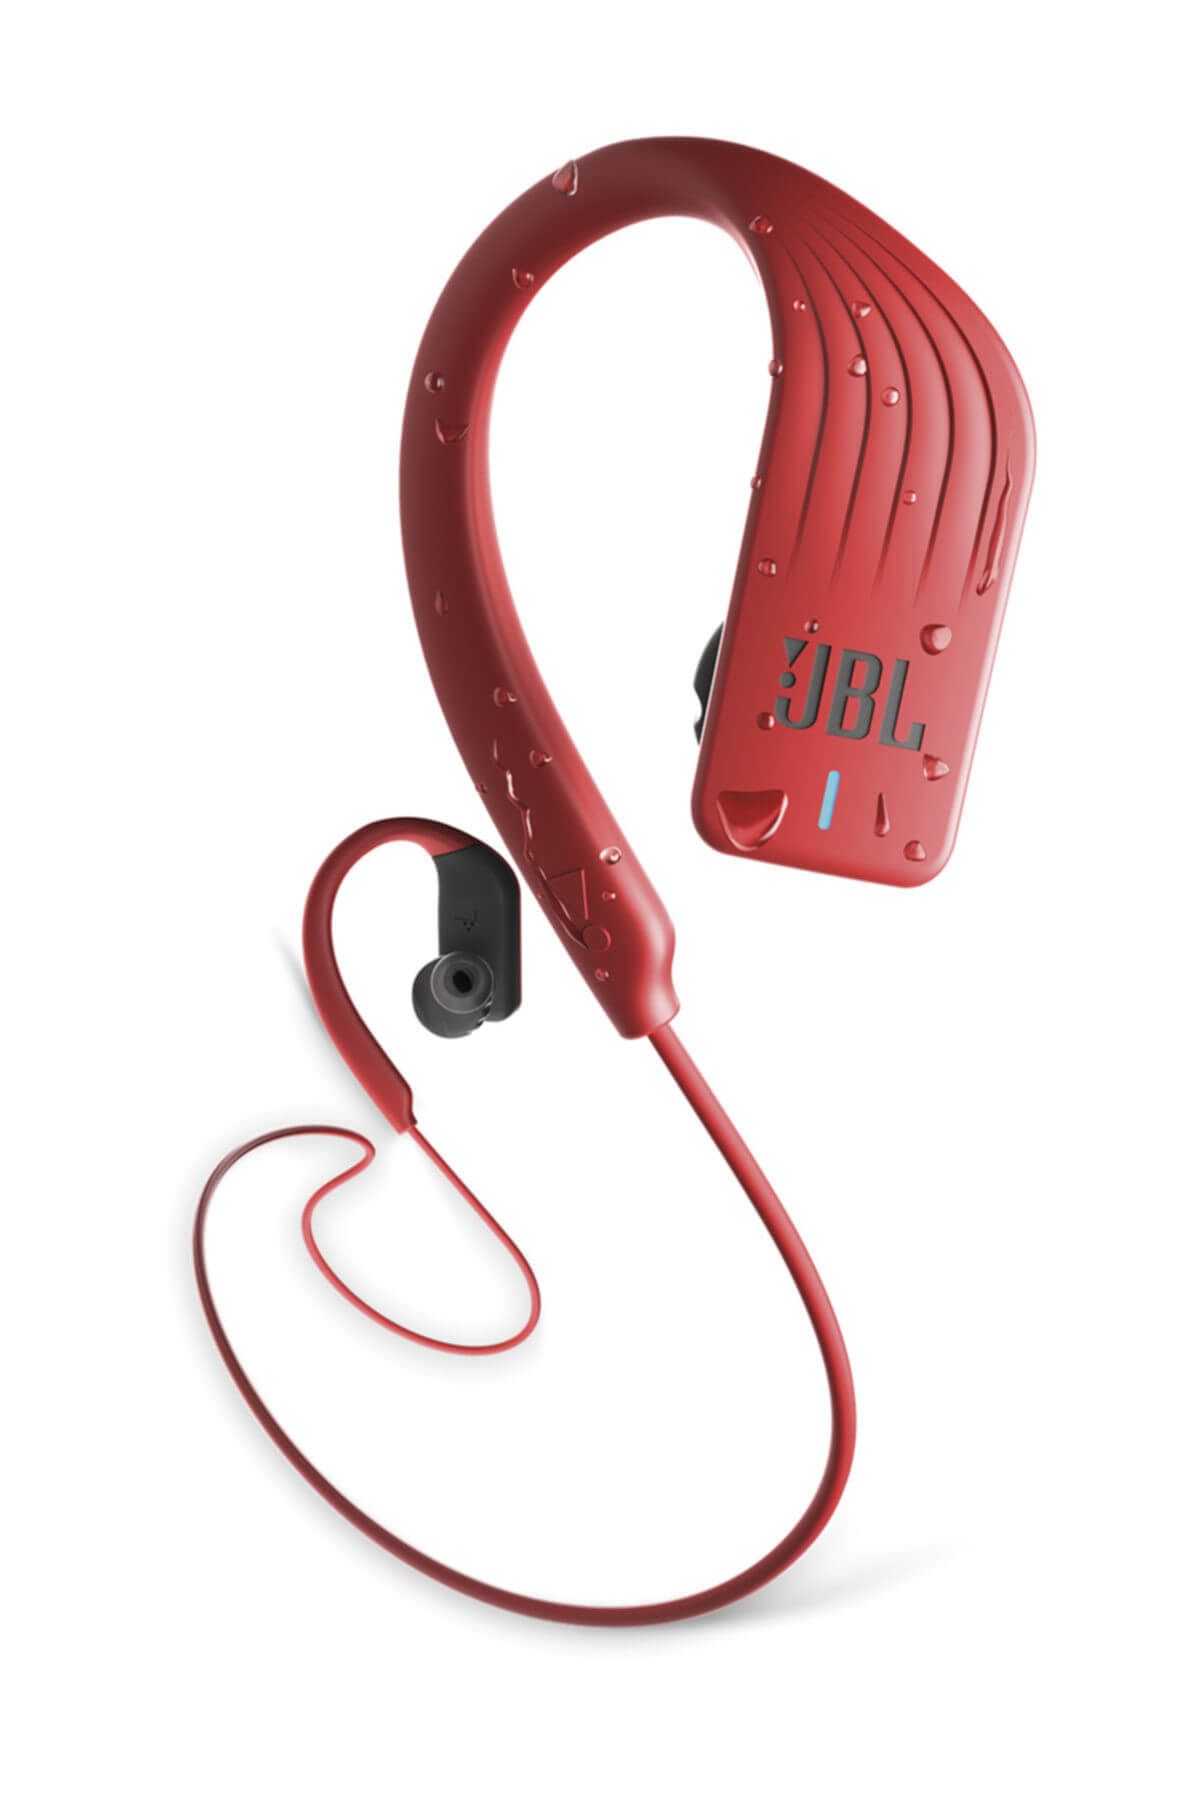 JBL Endurance Sprint Kırmızı Bluetooth Spor Kulak İçi Kulaklık